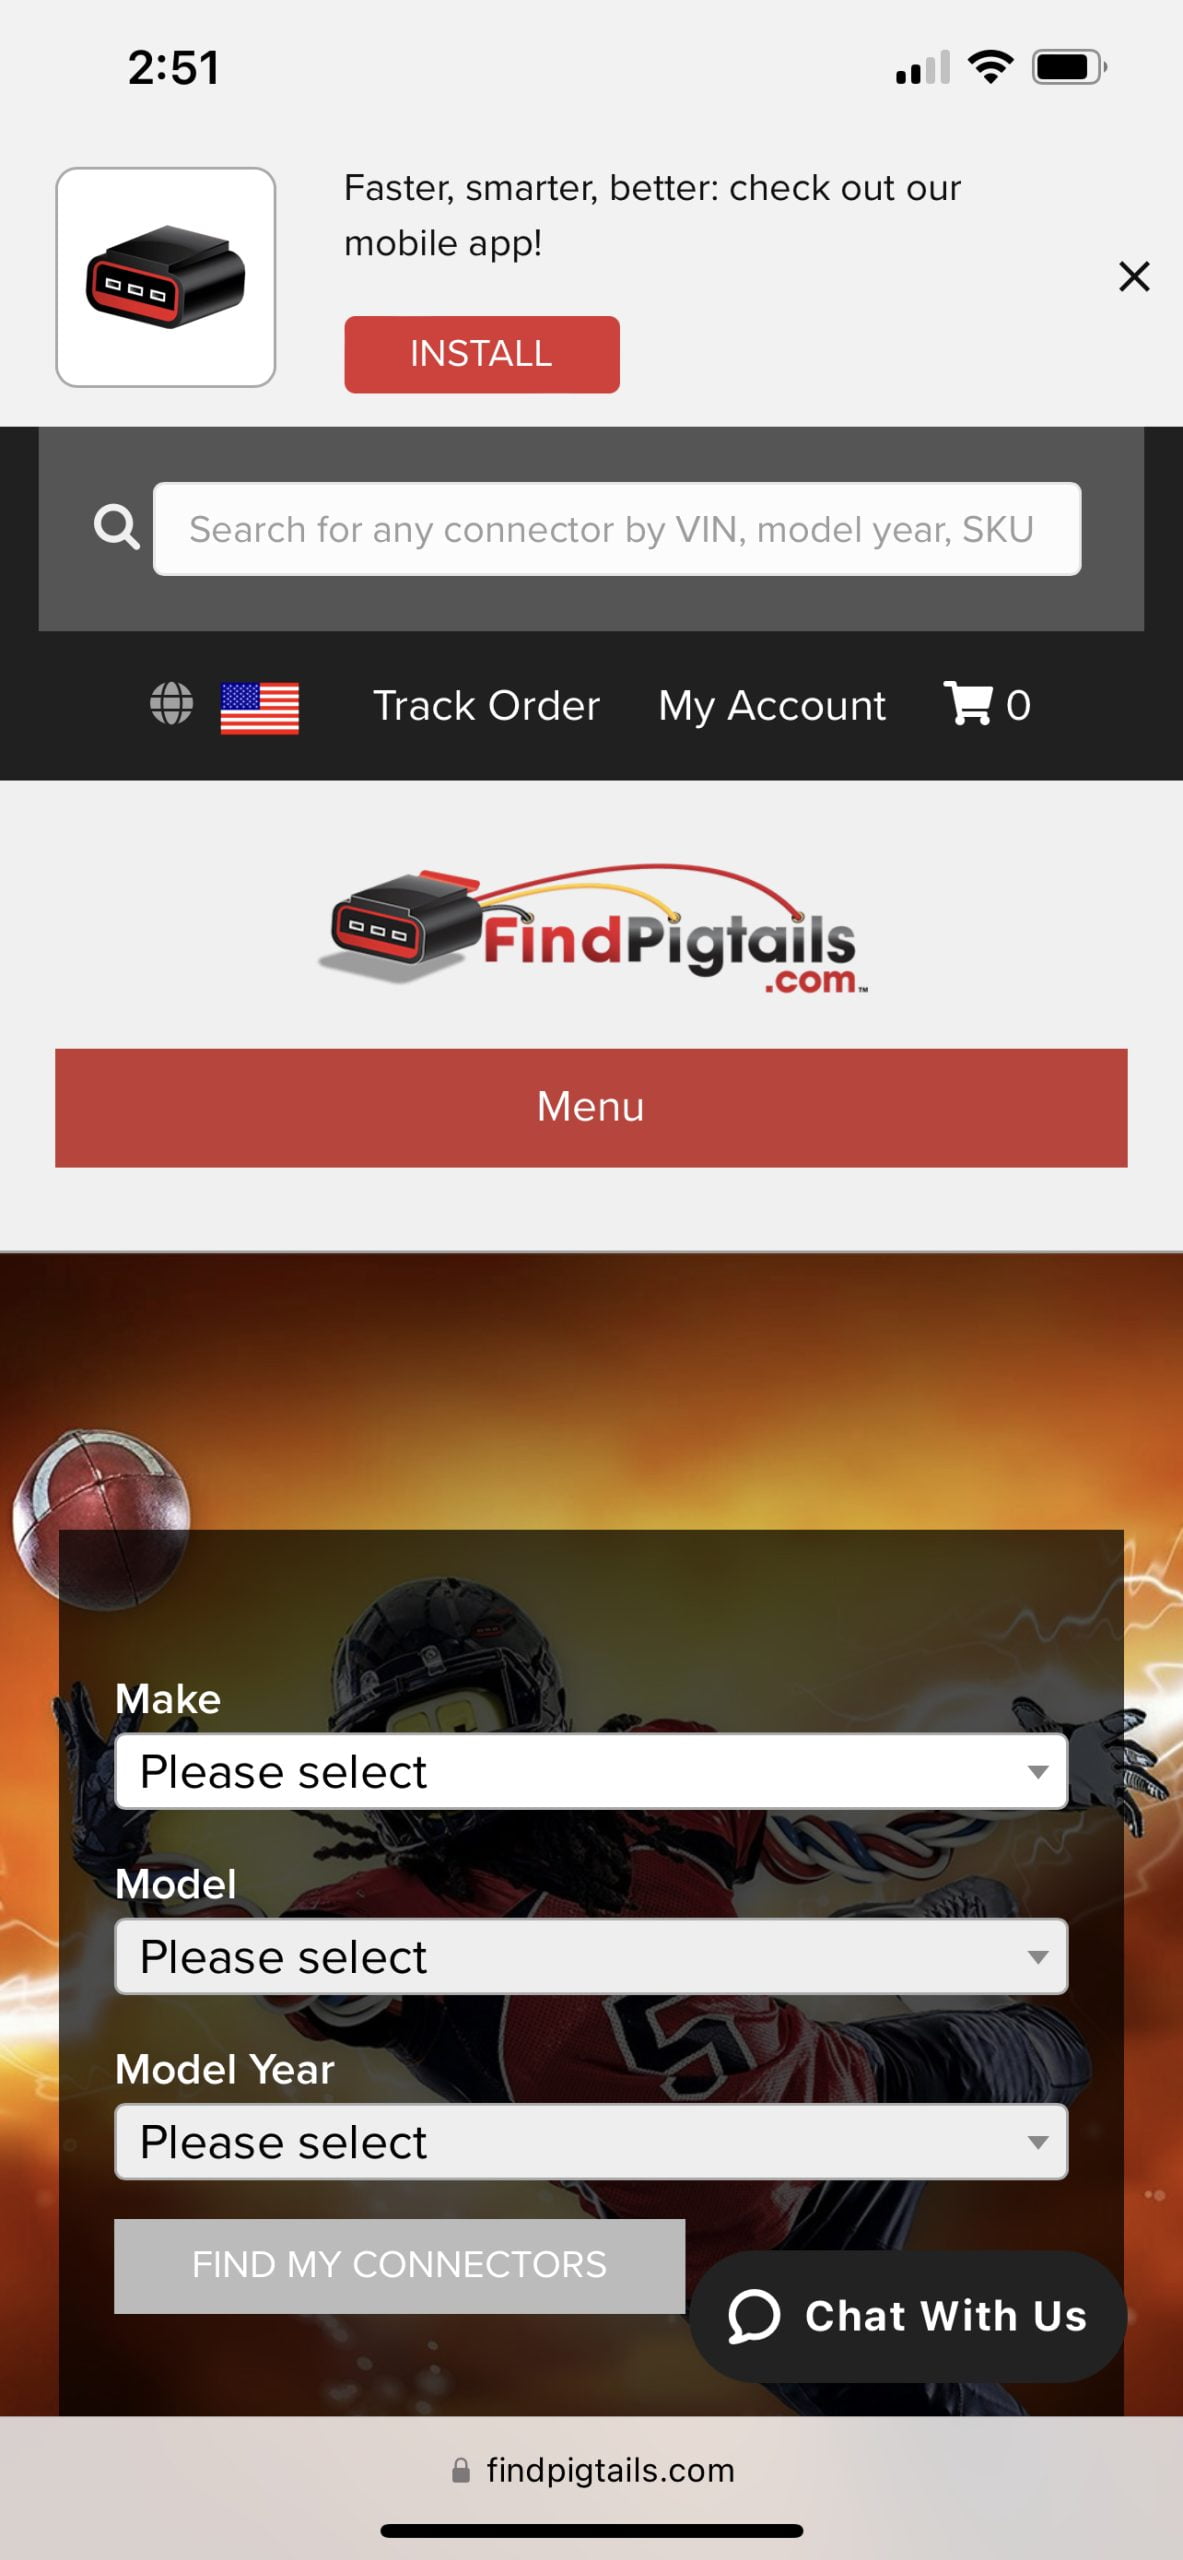 FindPigtails.com mobile version website with link to our mobile app